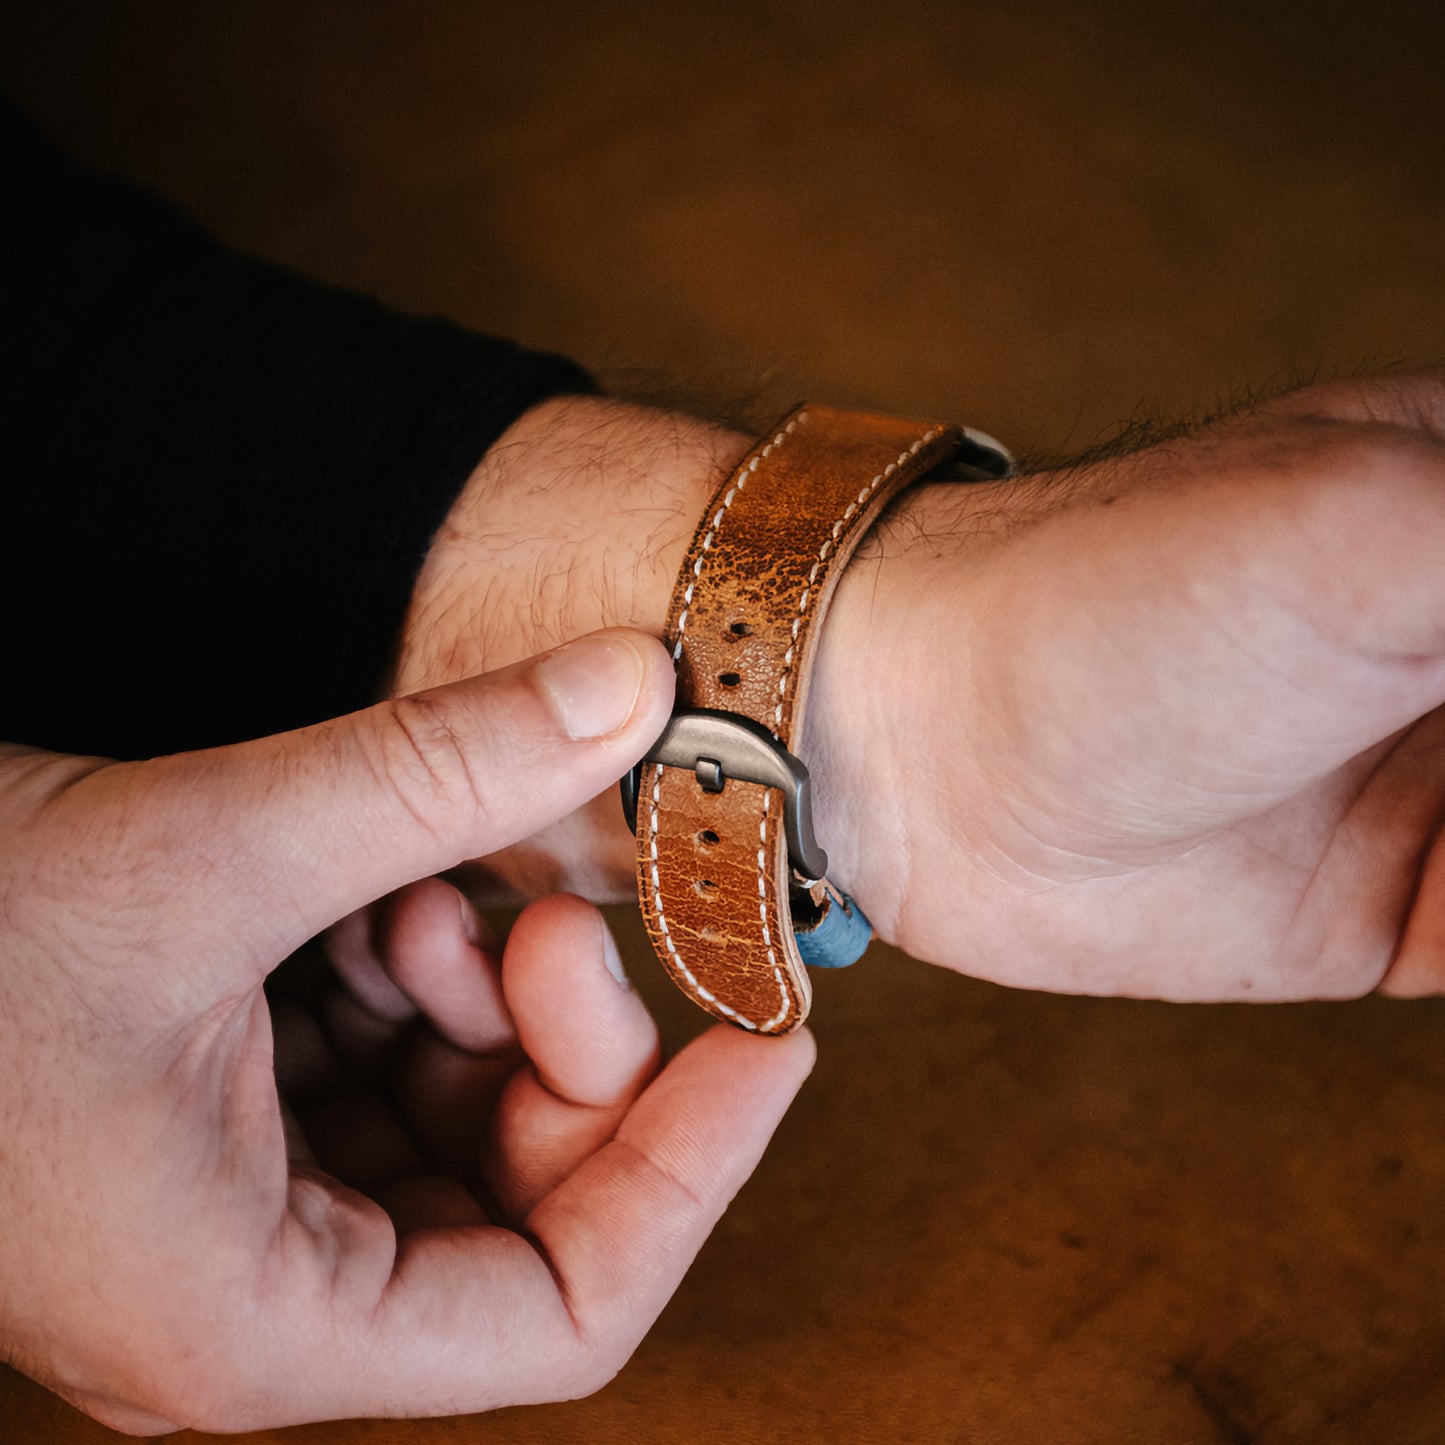 arktisband Riemchen Apple Watch Armband by Zirkeltraining